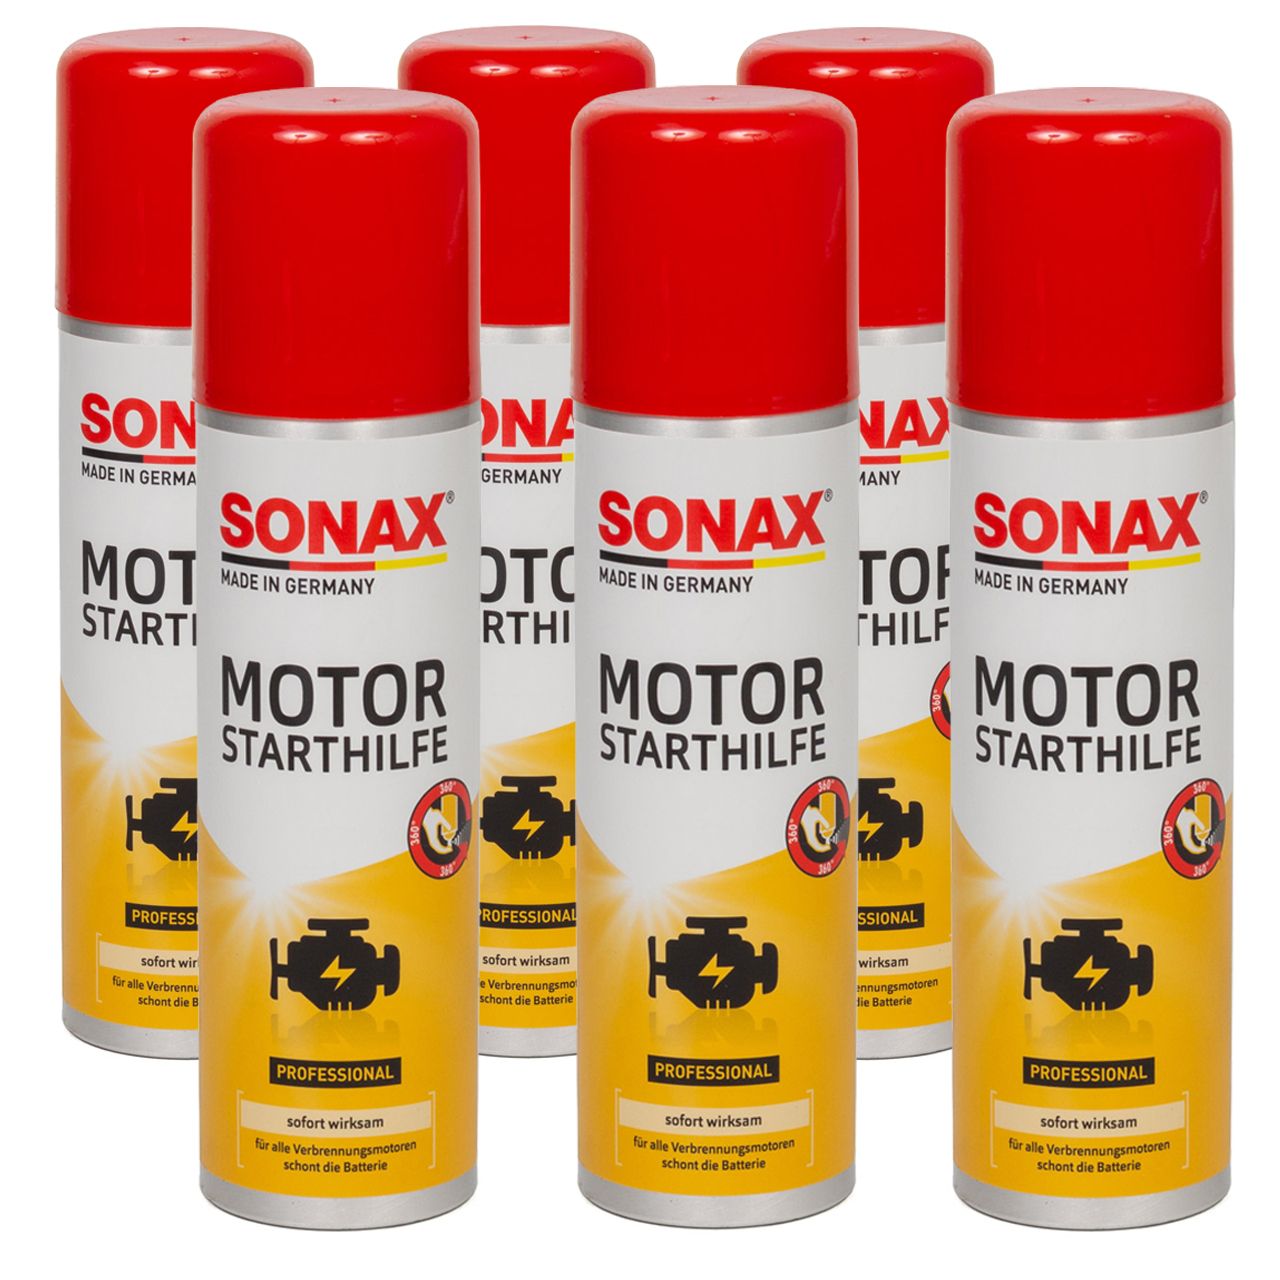 6x 250ml SONAX 312100 Motor Starthilfe Starpilot Starthilfespray Starterspray